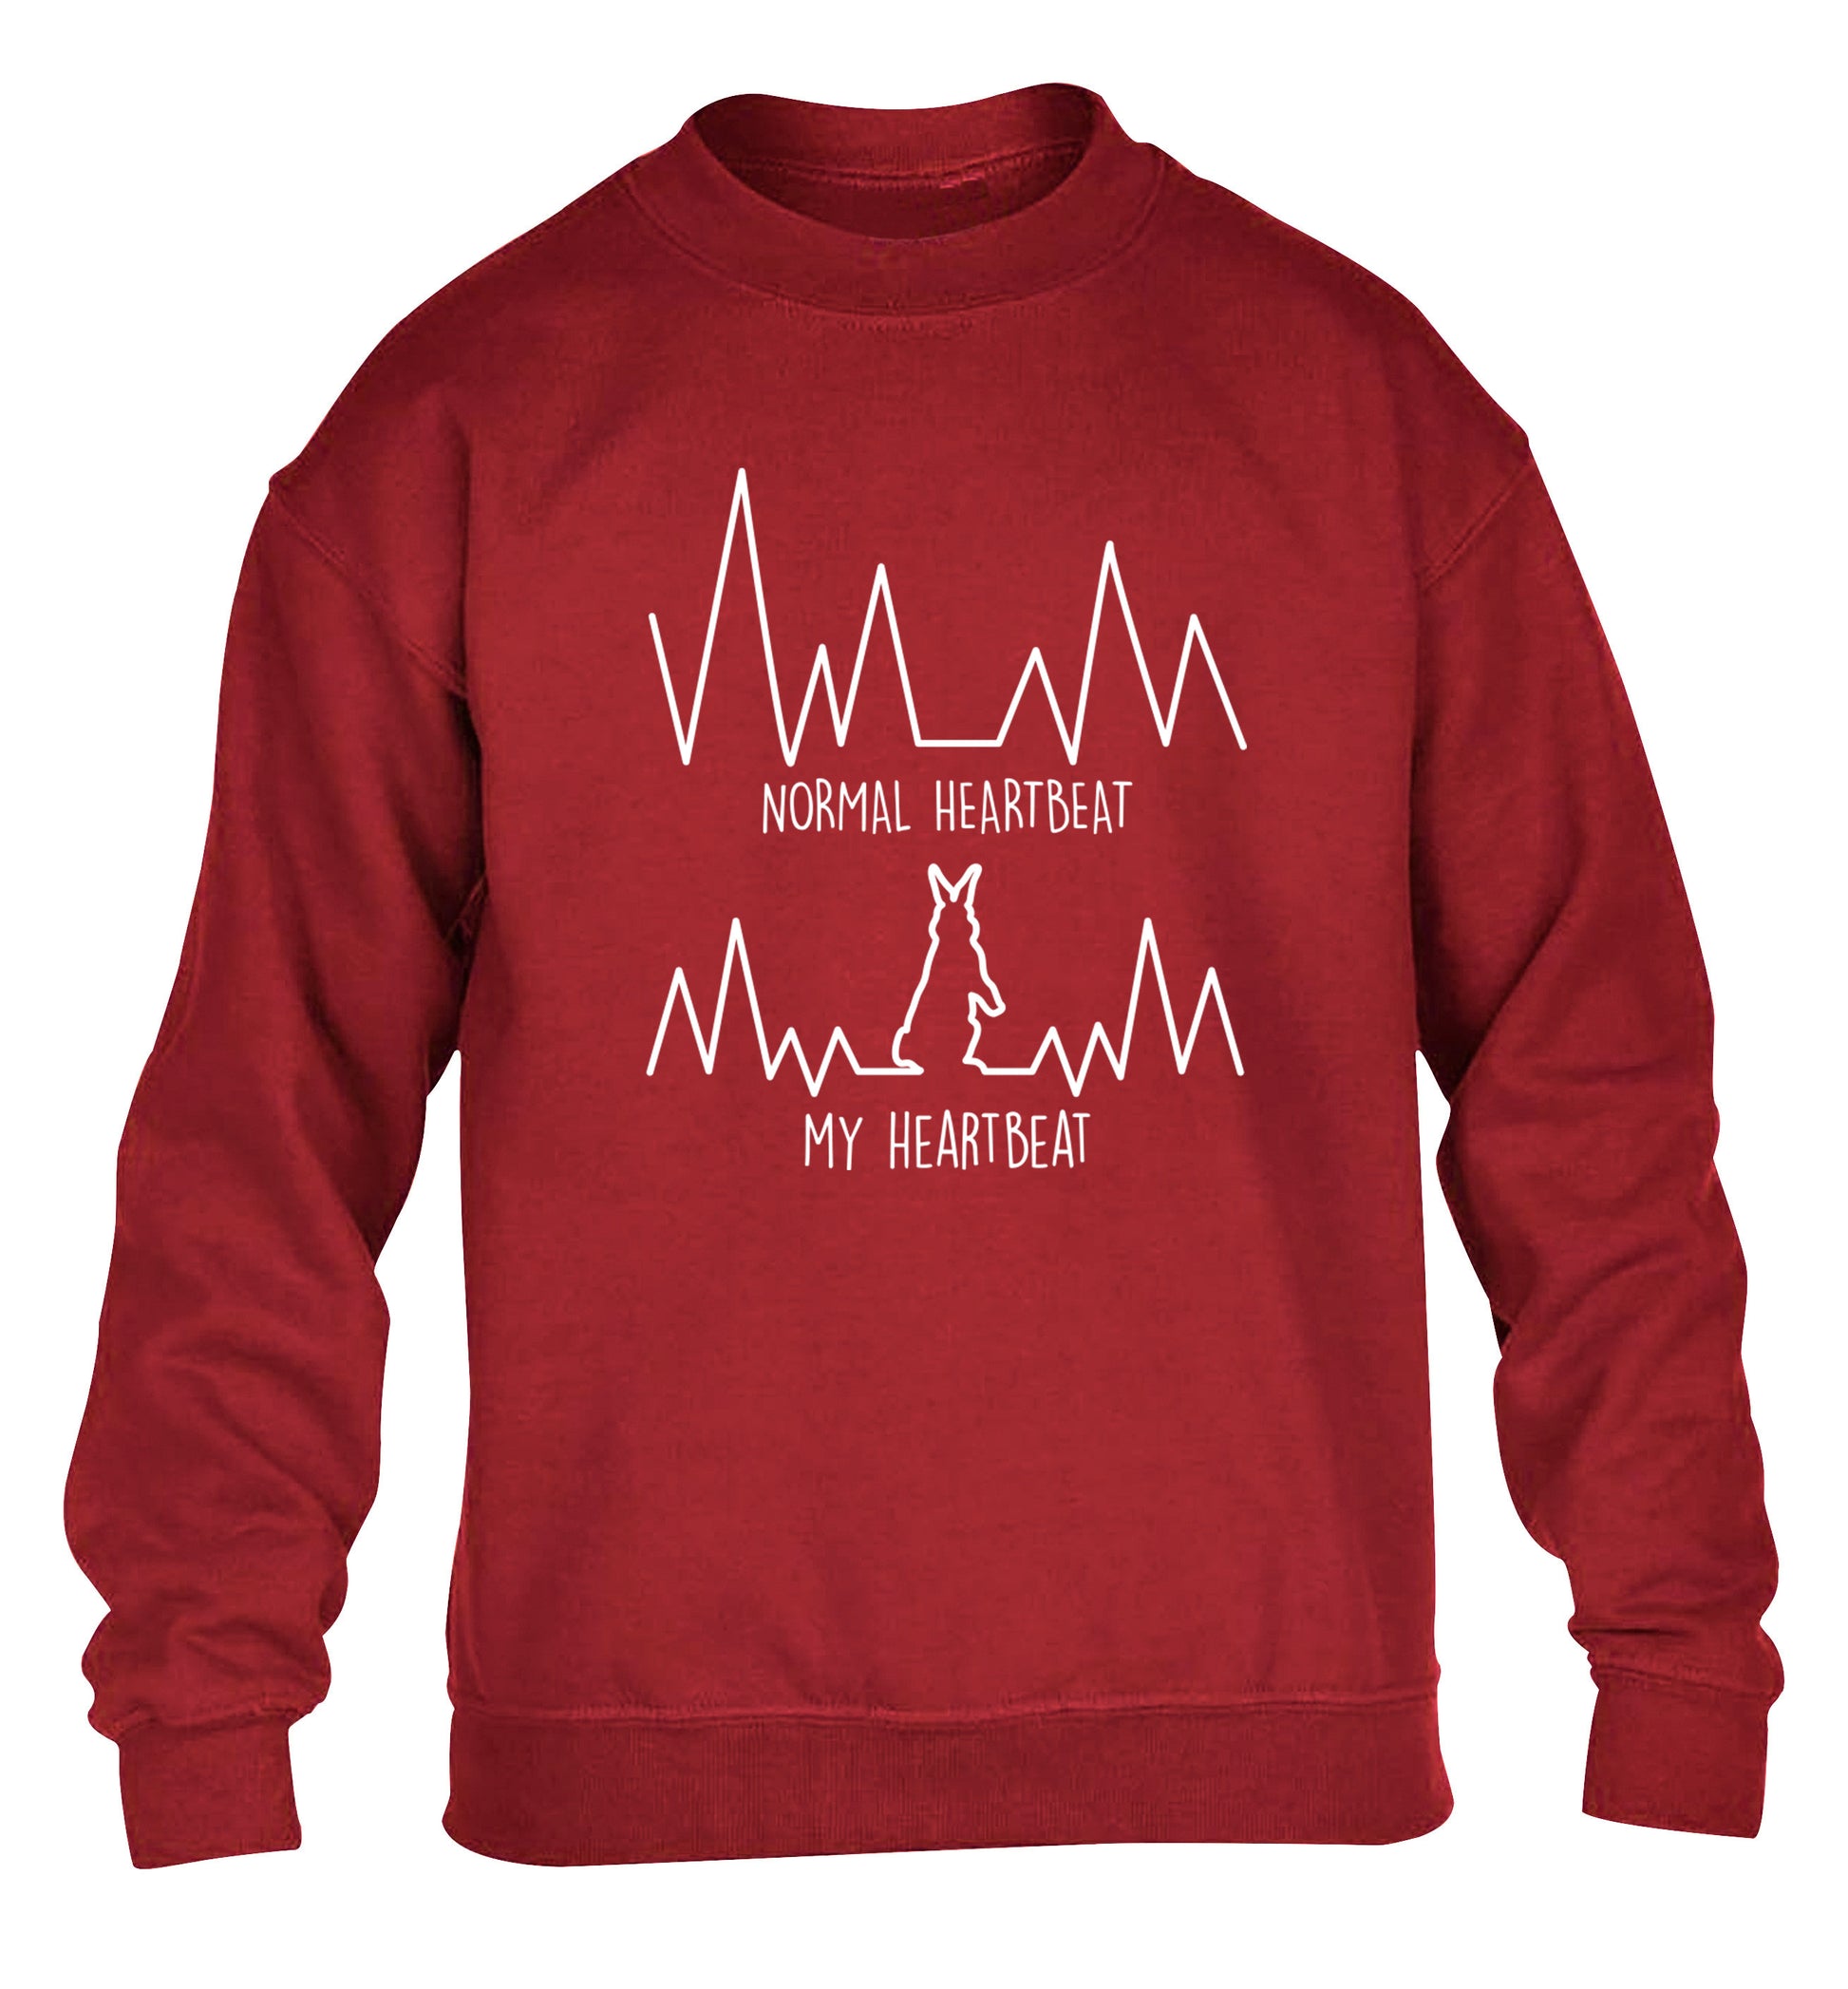 Normal heartbeat, my heartbeat rabbit lover children's grey  sweater 12-14 Years